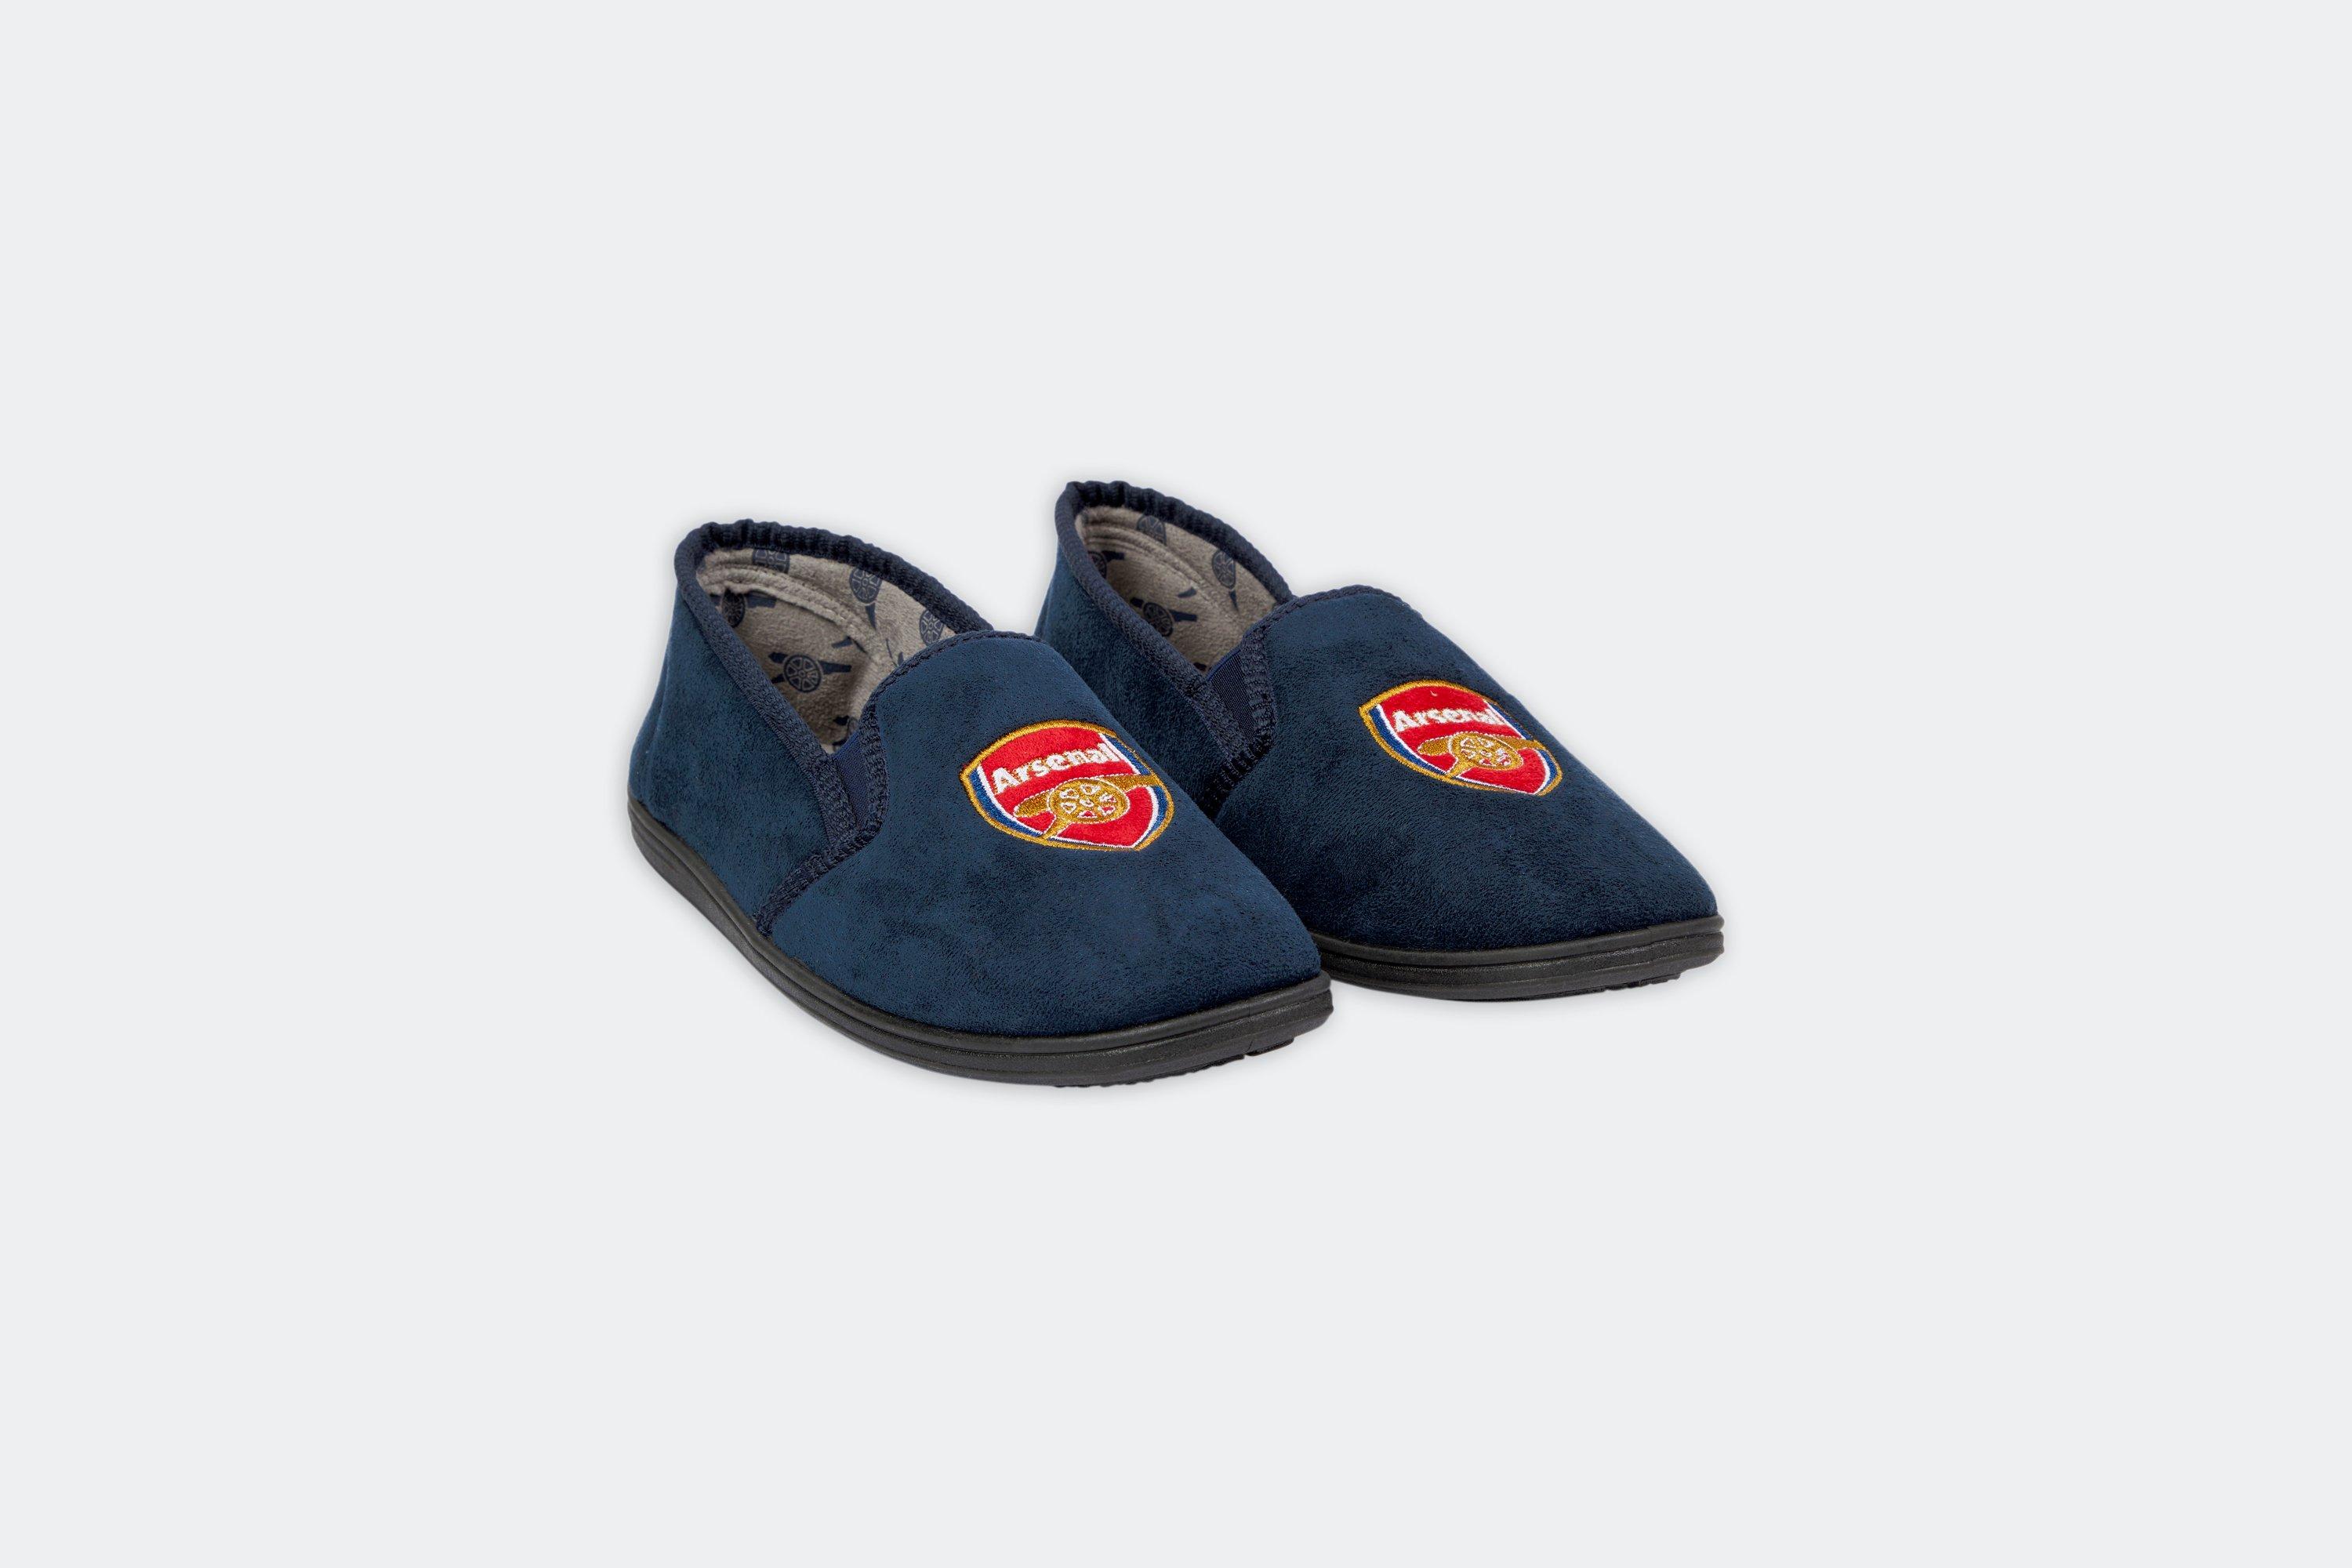 Arsenal Crest Slippers